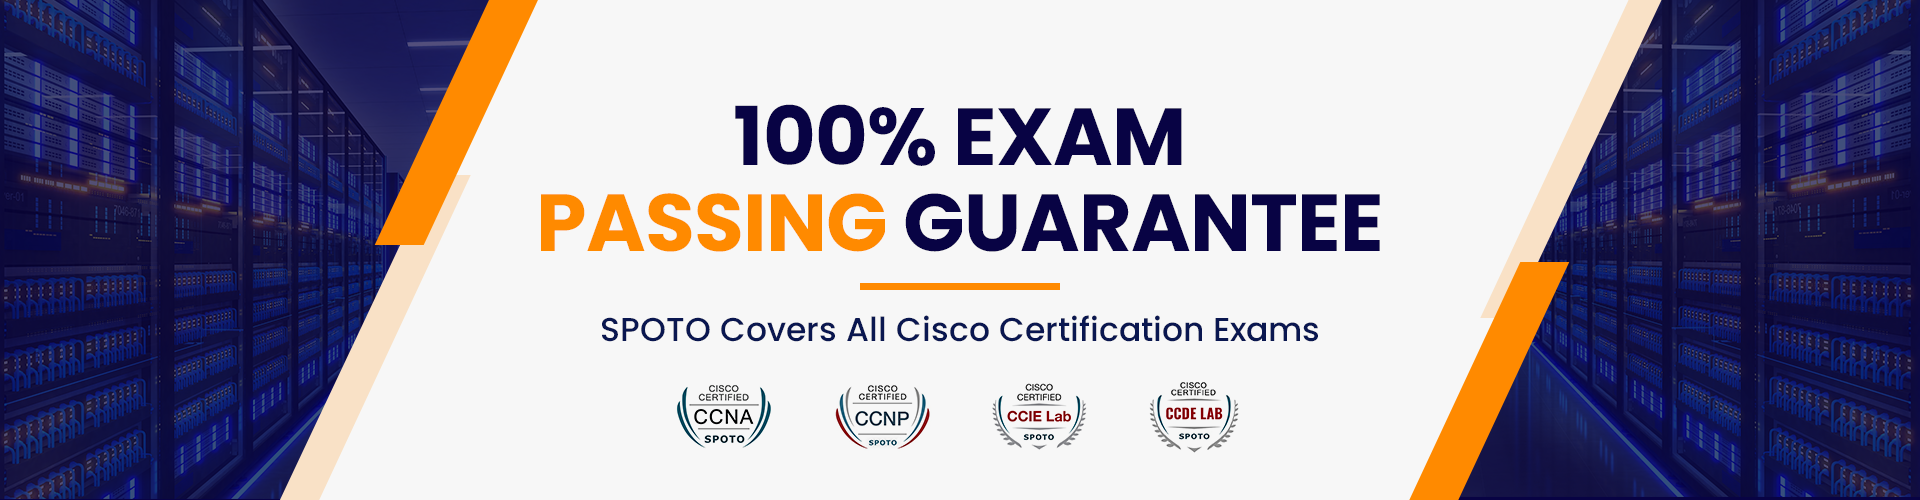 Cisco passing guarantee